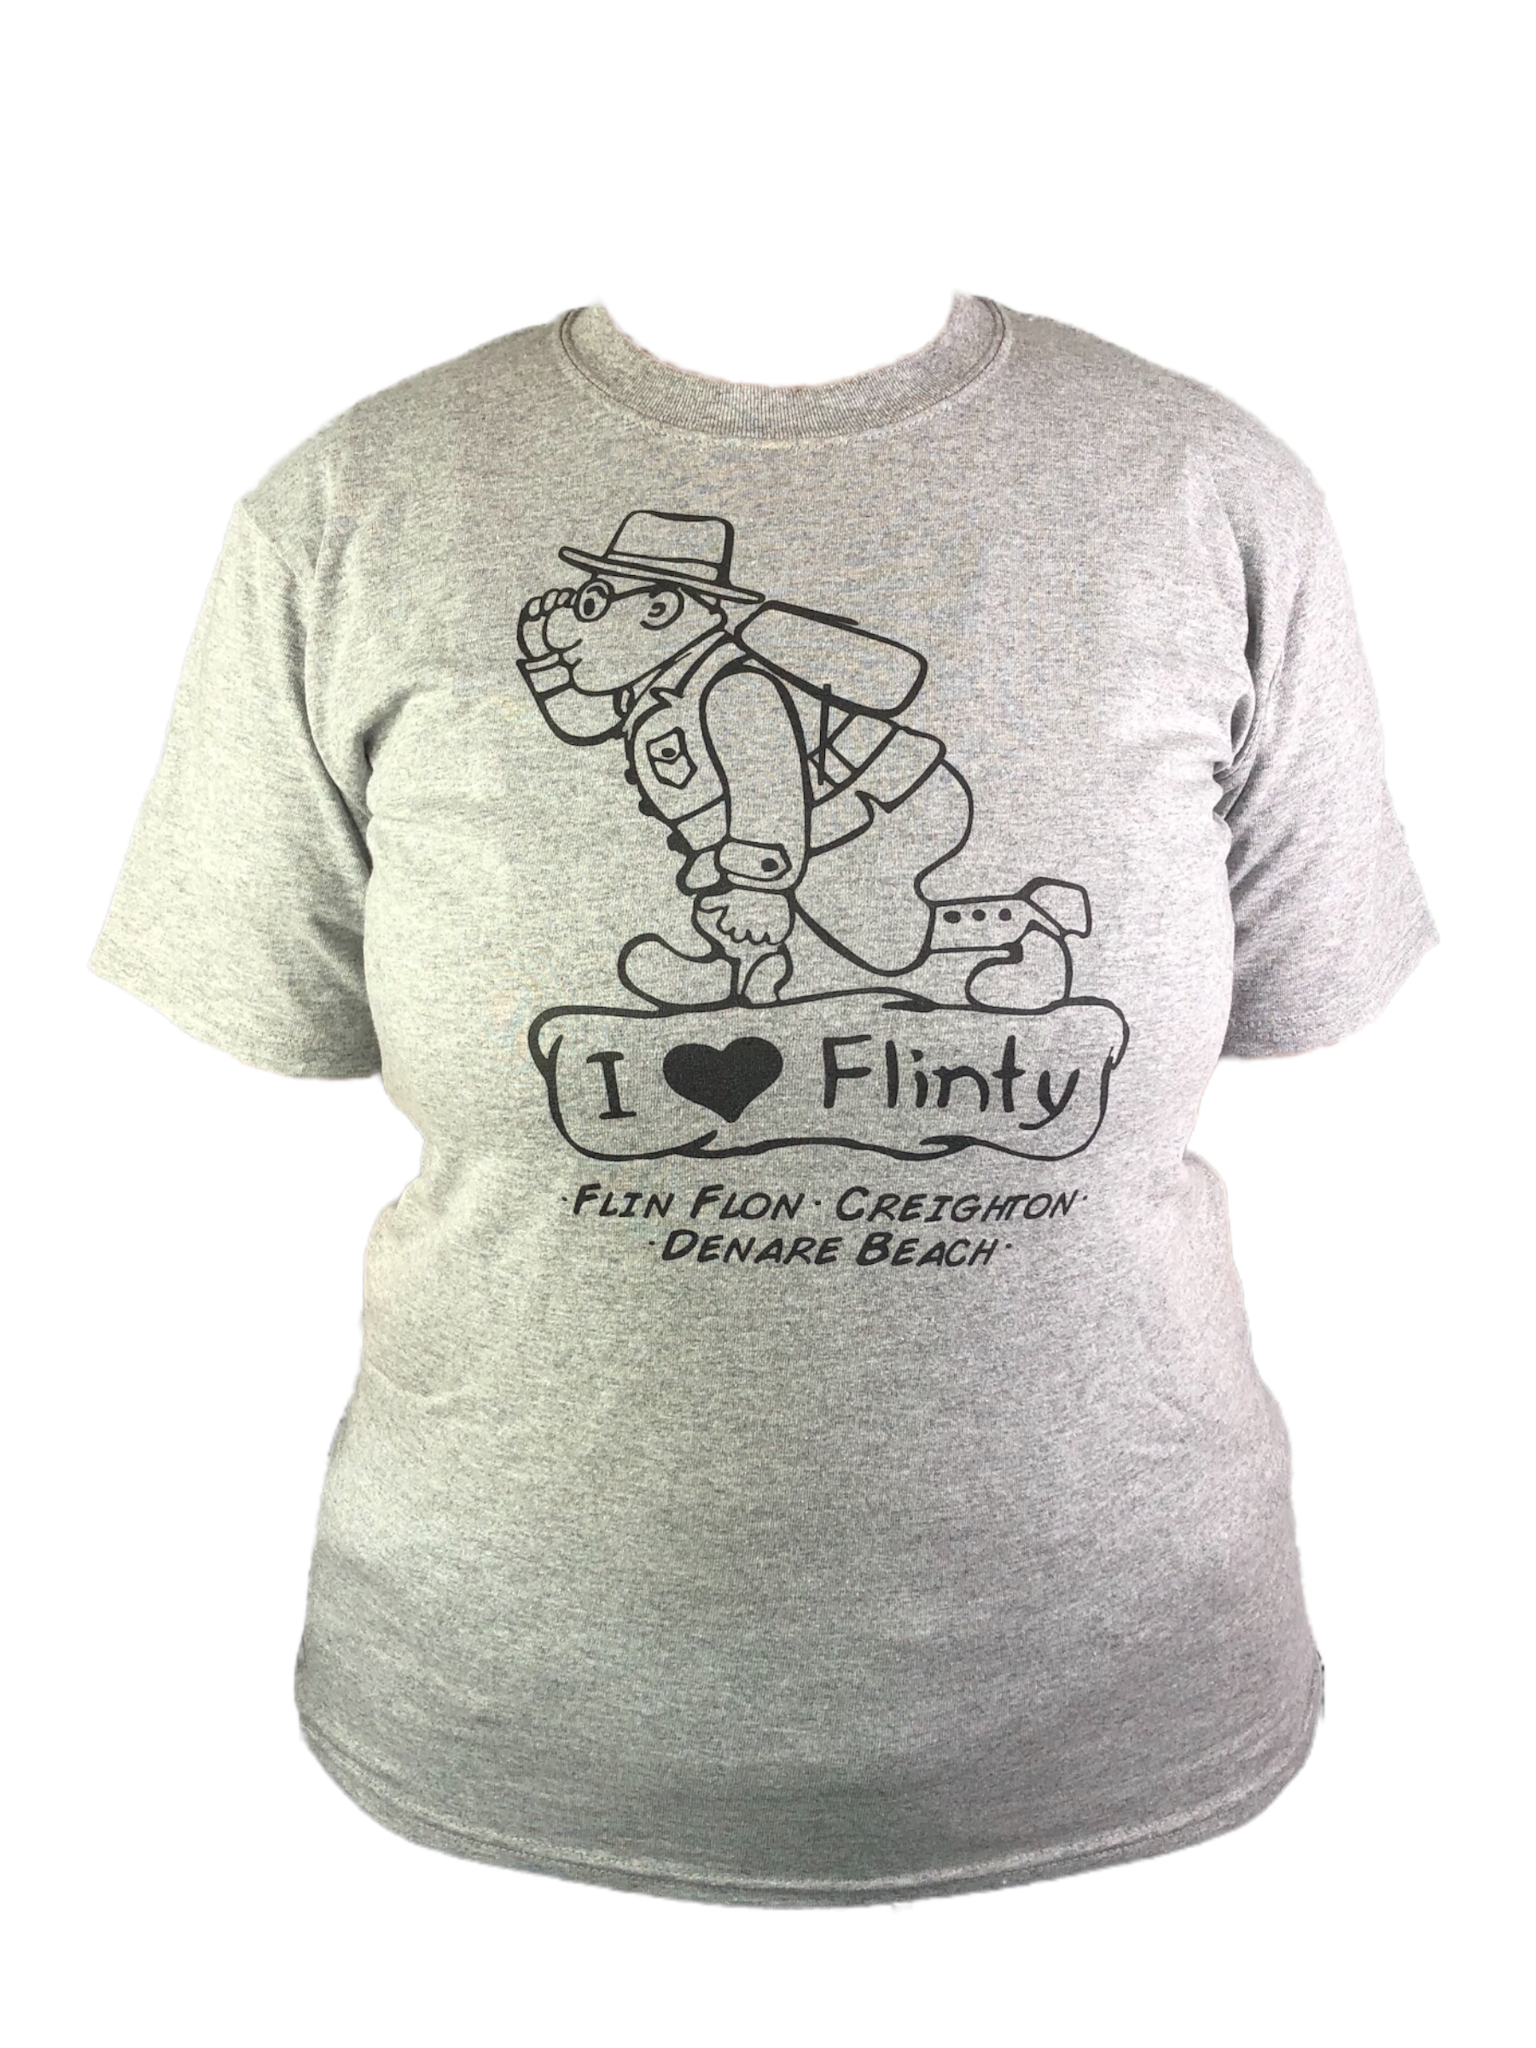 "I love Flinty" T-shirt